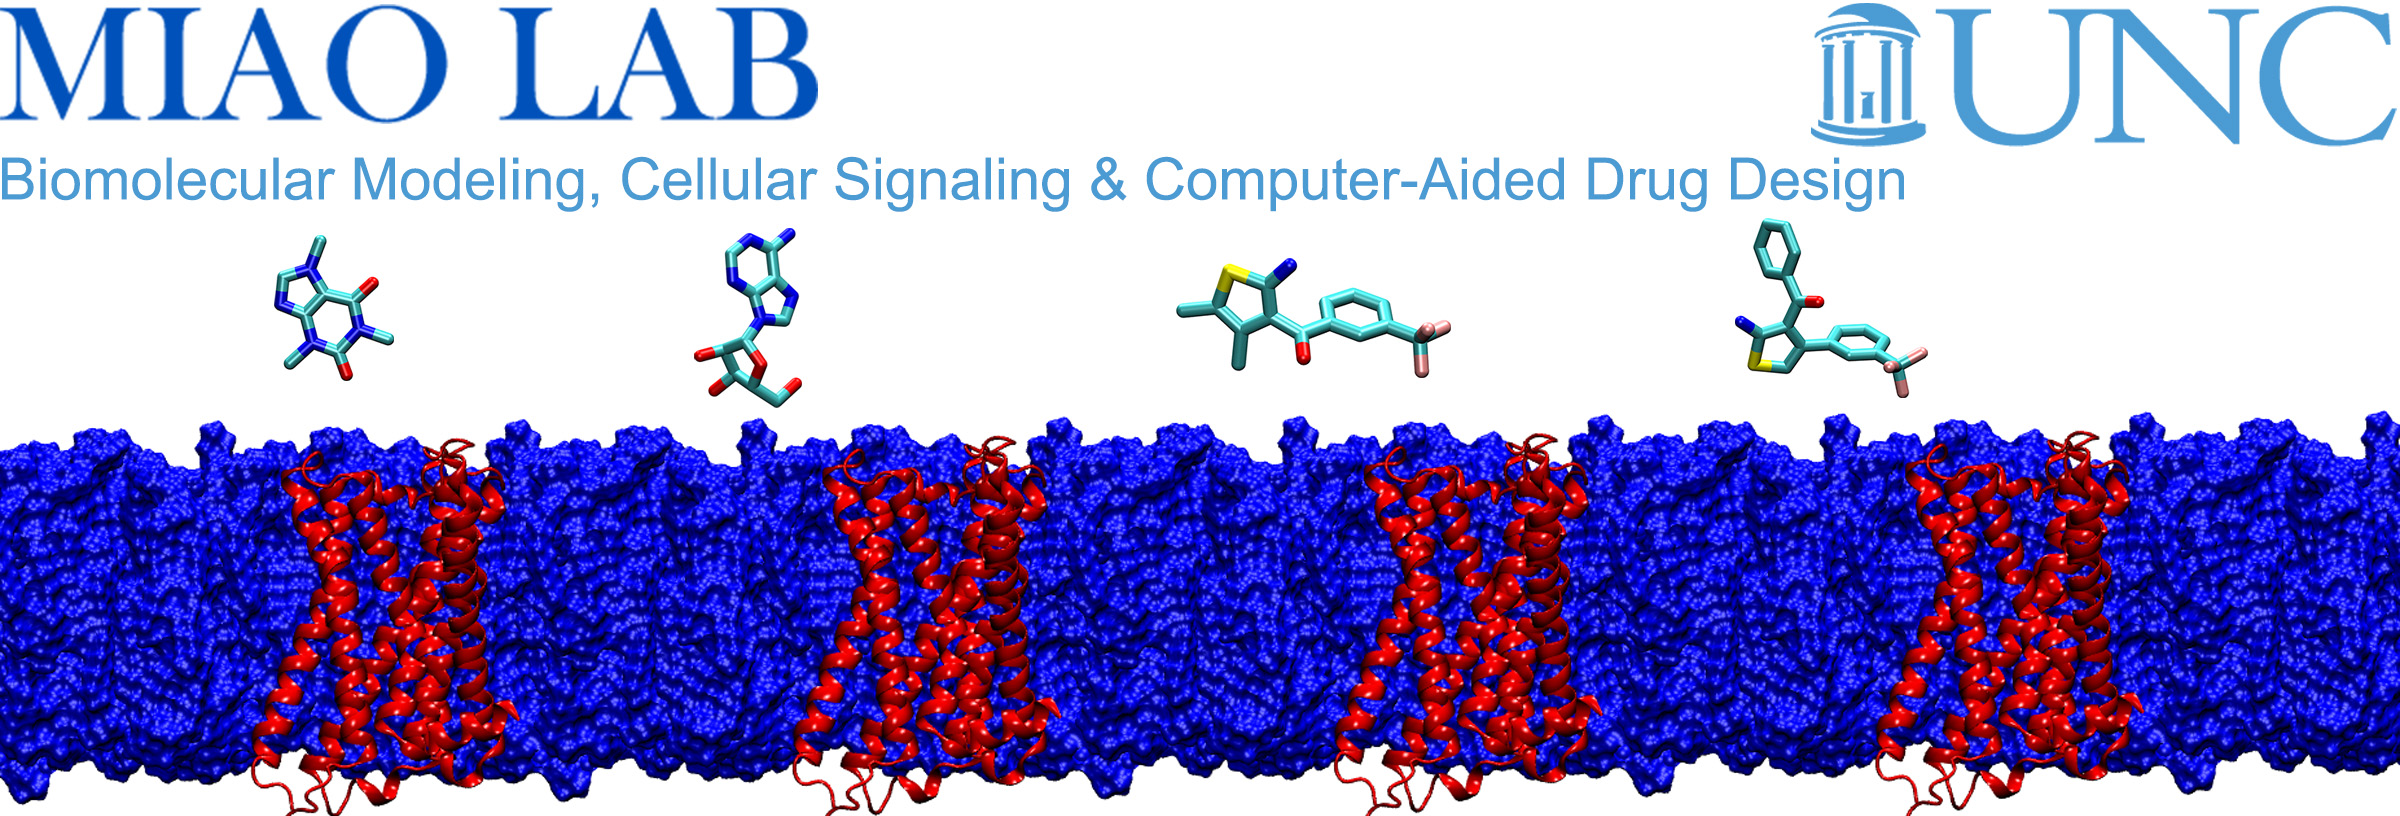 UNC MIao Lab: Biomolecular Modeling, Cellular Signaling & Computer-Aided Drug Design.